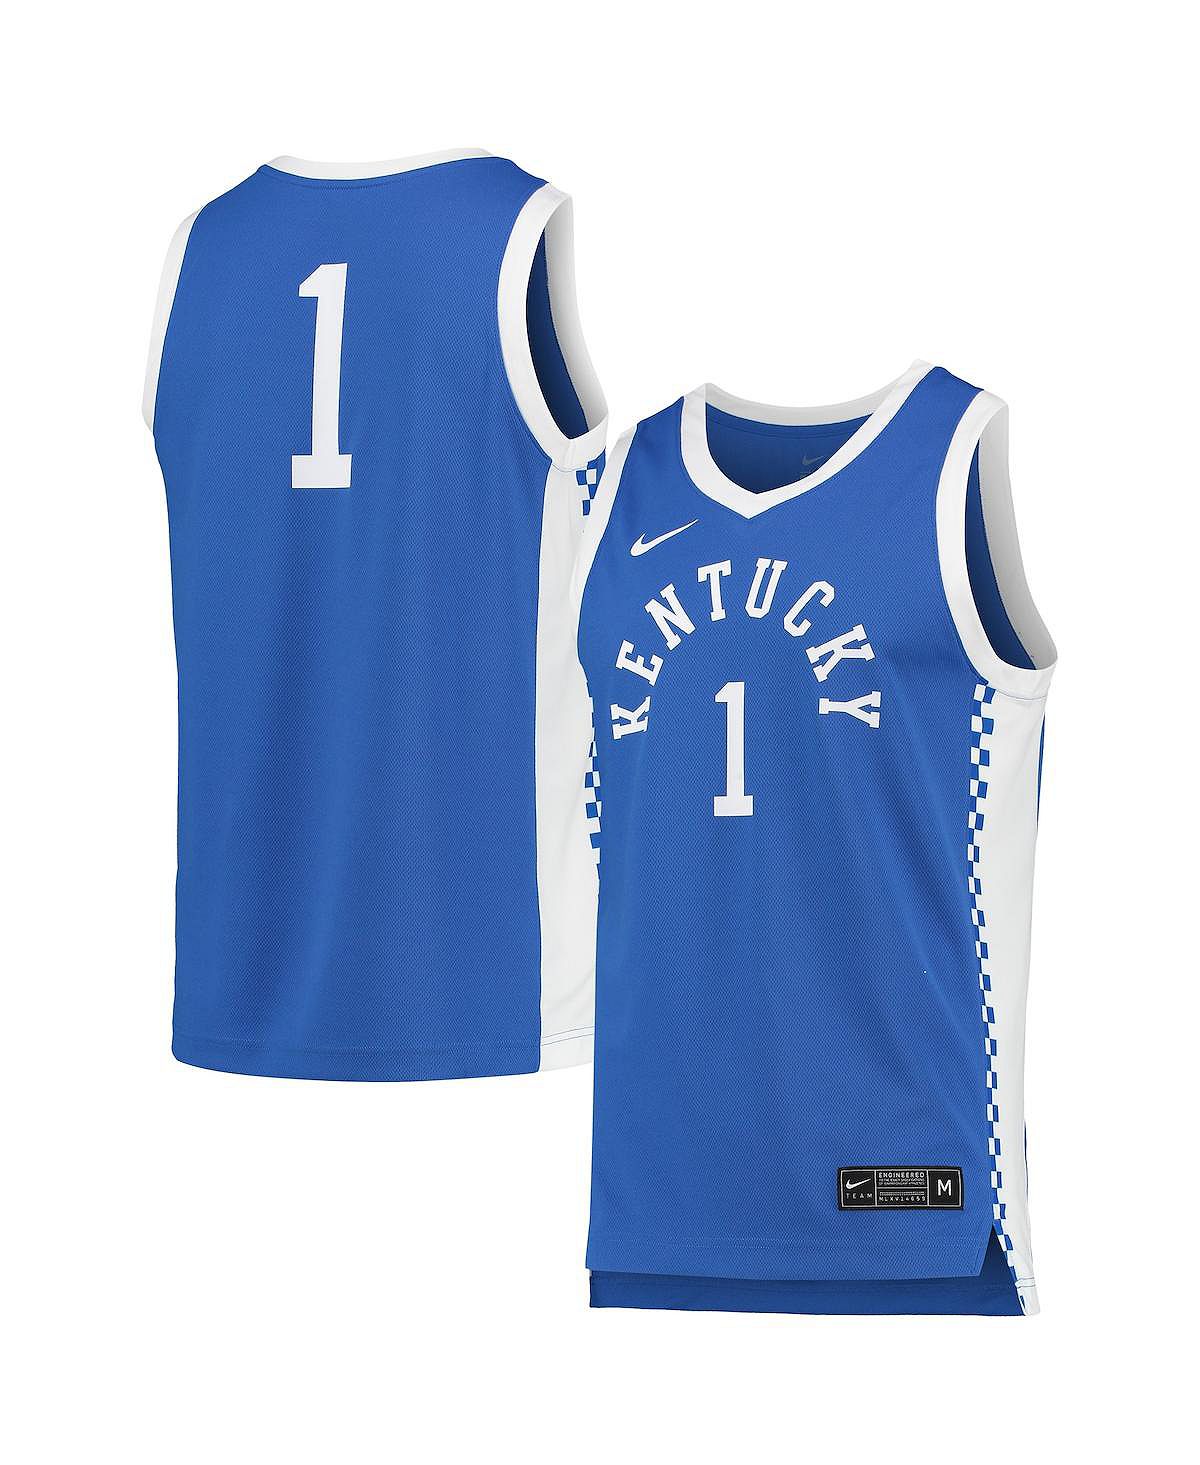 Футболка Nike Unisex 1 Royal Kentucky Wildcats, синий/белый мужская баскетбольная майка royal kentucky wildcats limited nike